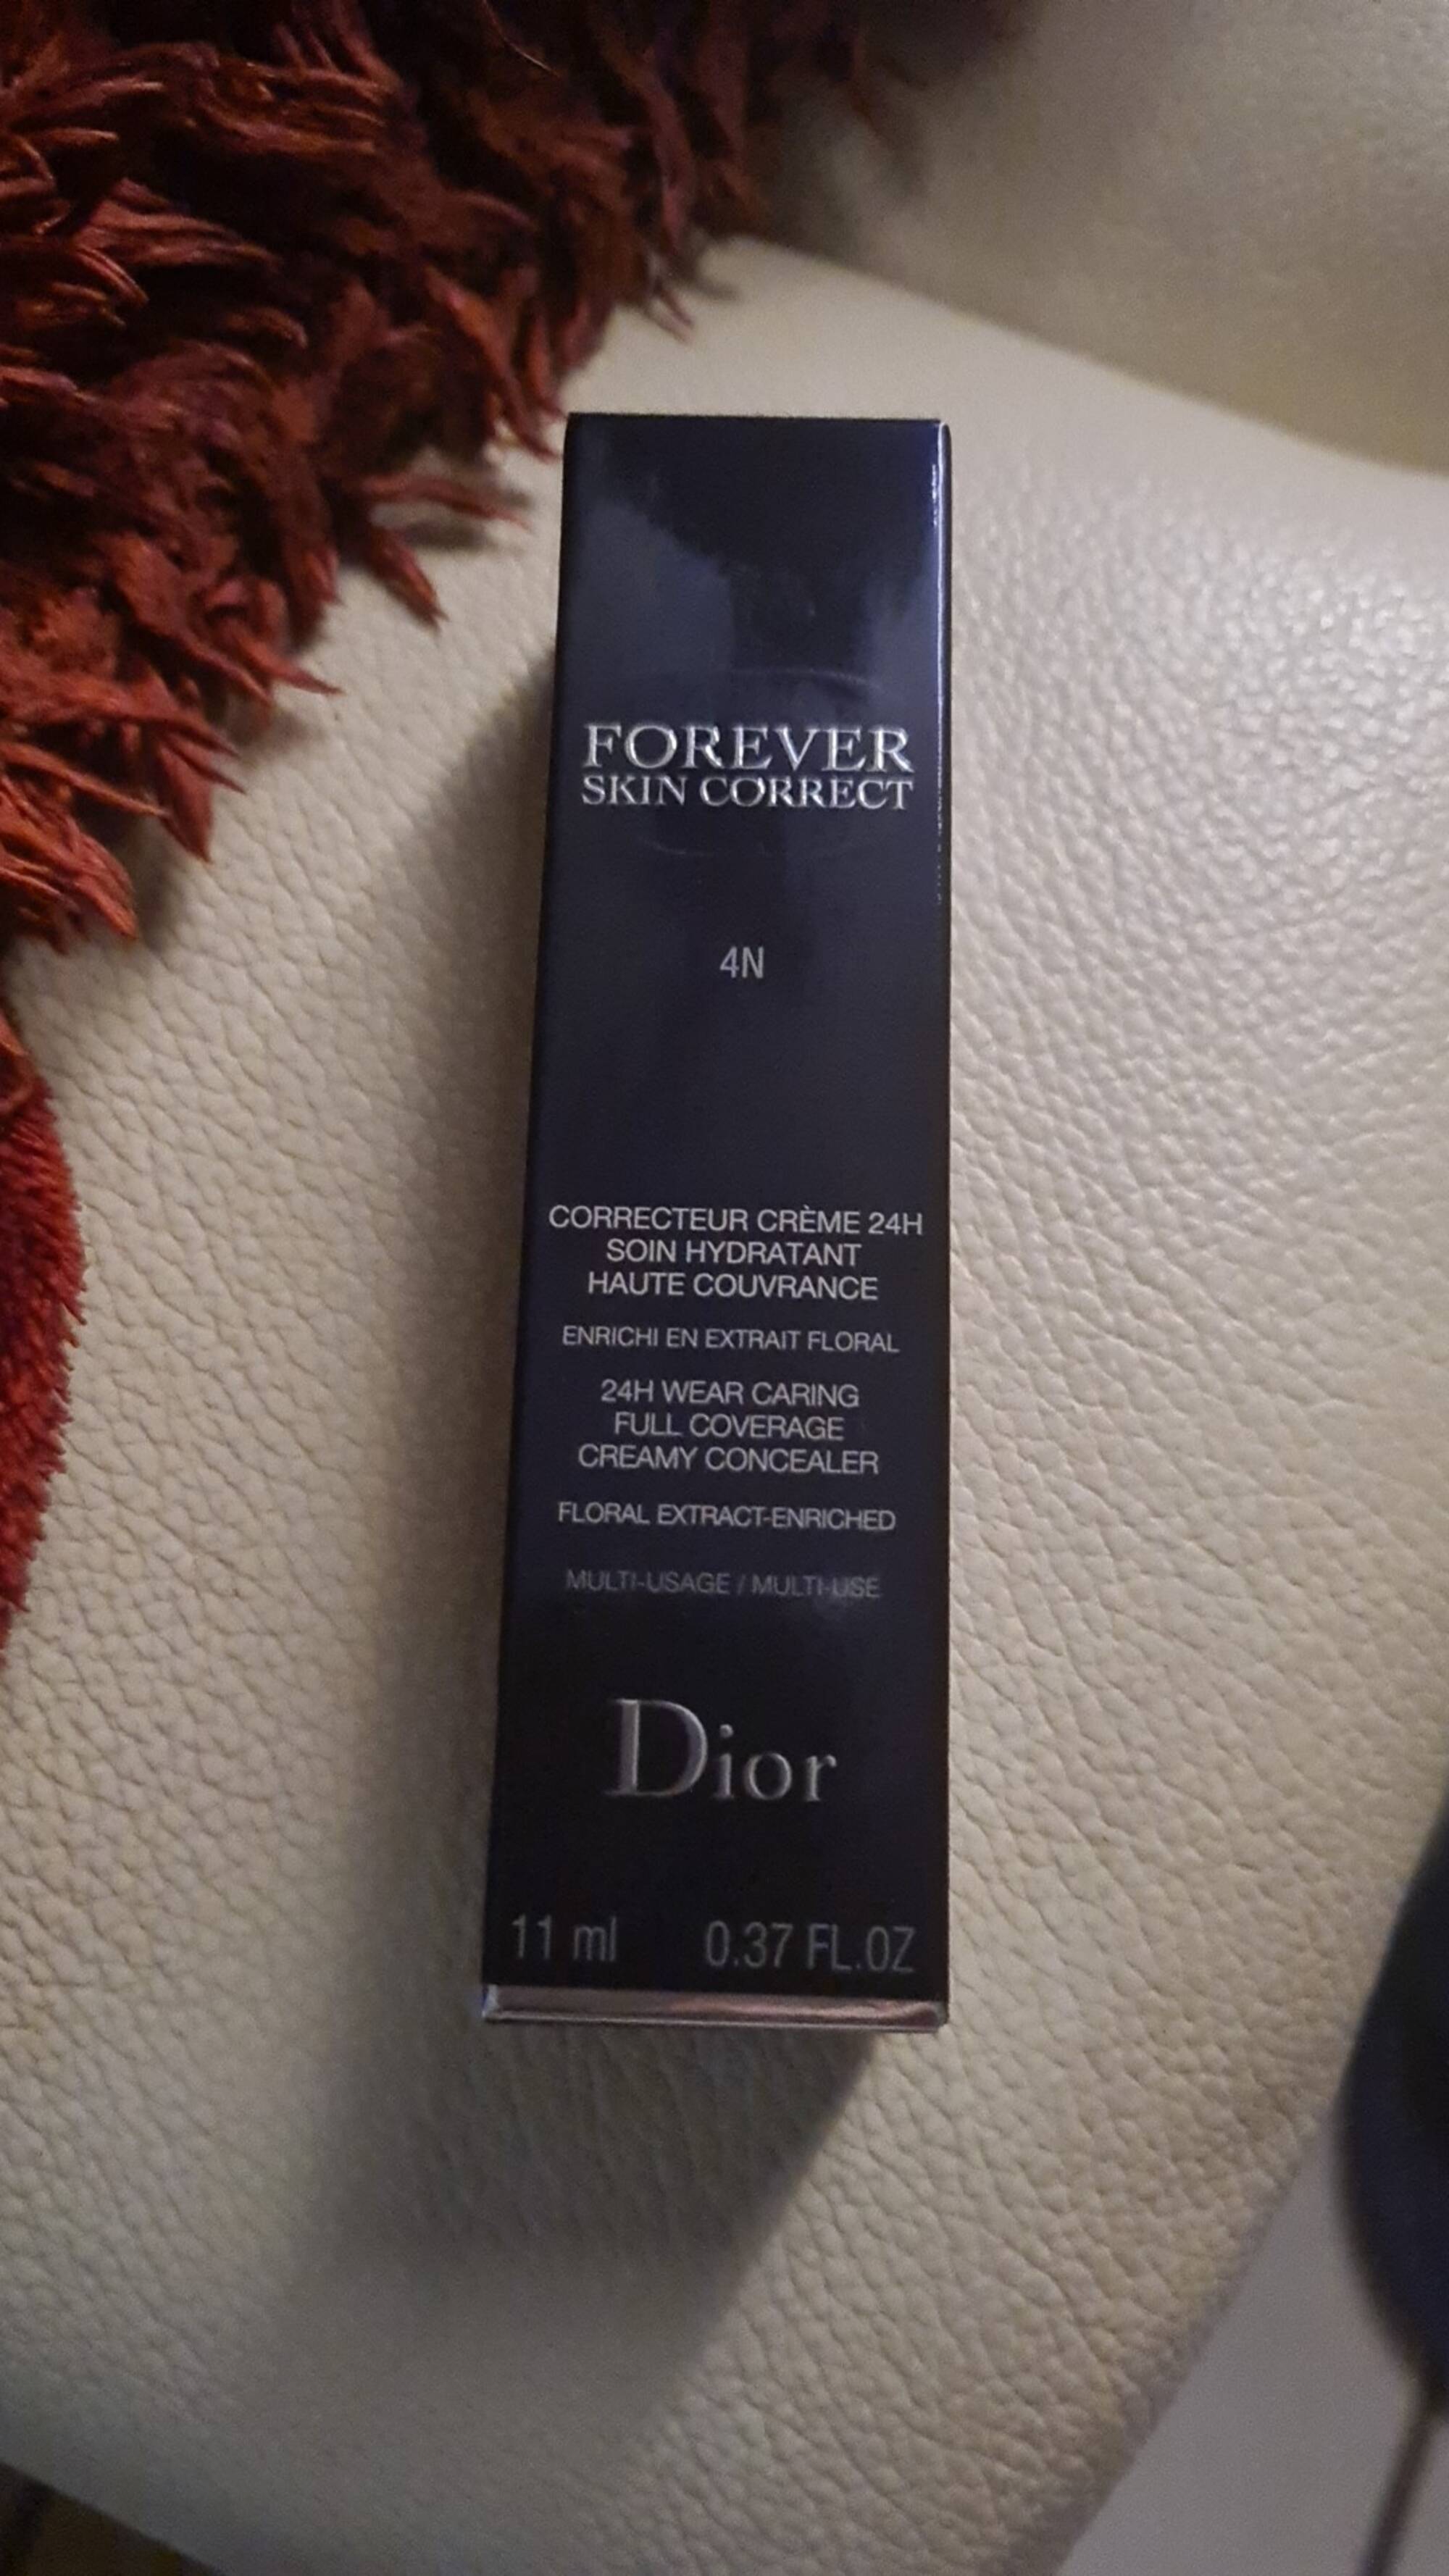 DIOR - Forever skin correct - Correcteur crème 24h soin hydratant